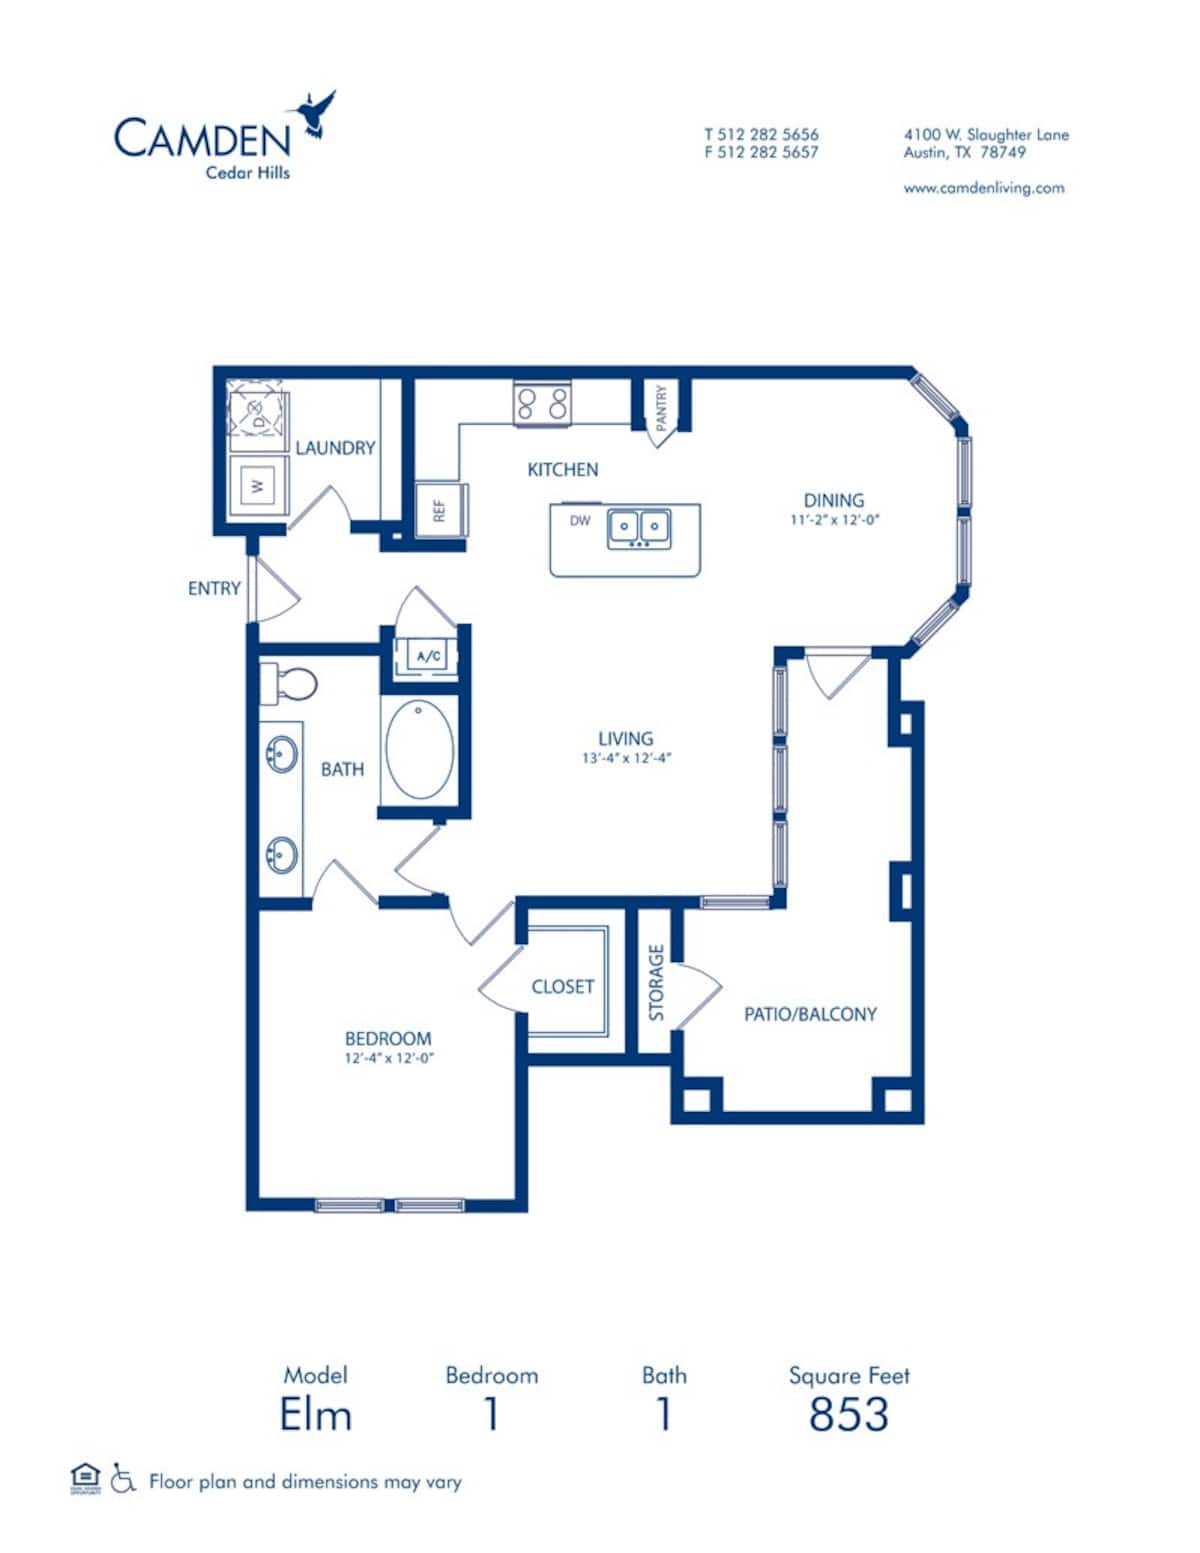 Floorplan diagram for Elm, showing 1 bedroom